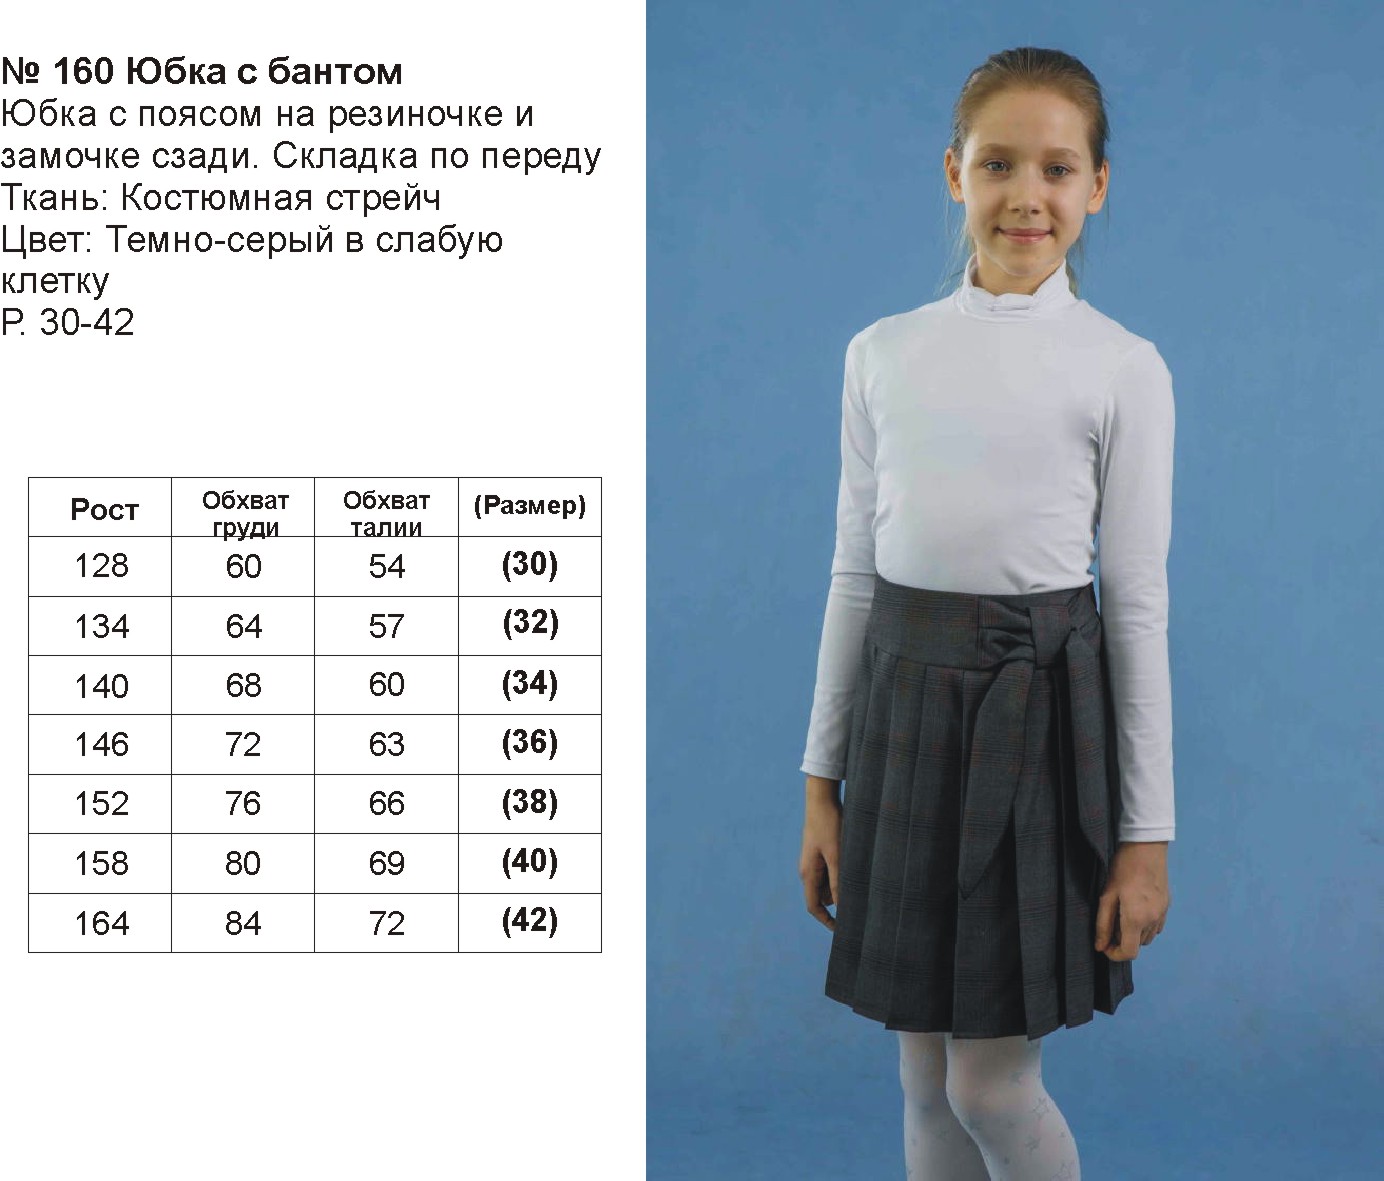 Размеры юбок для девочек таблица